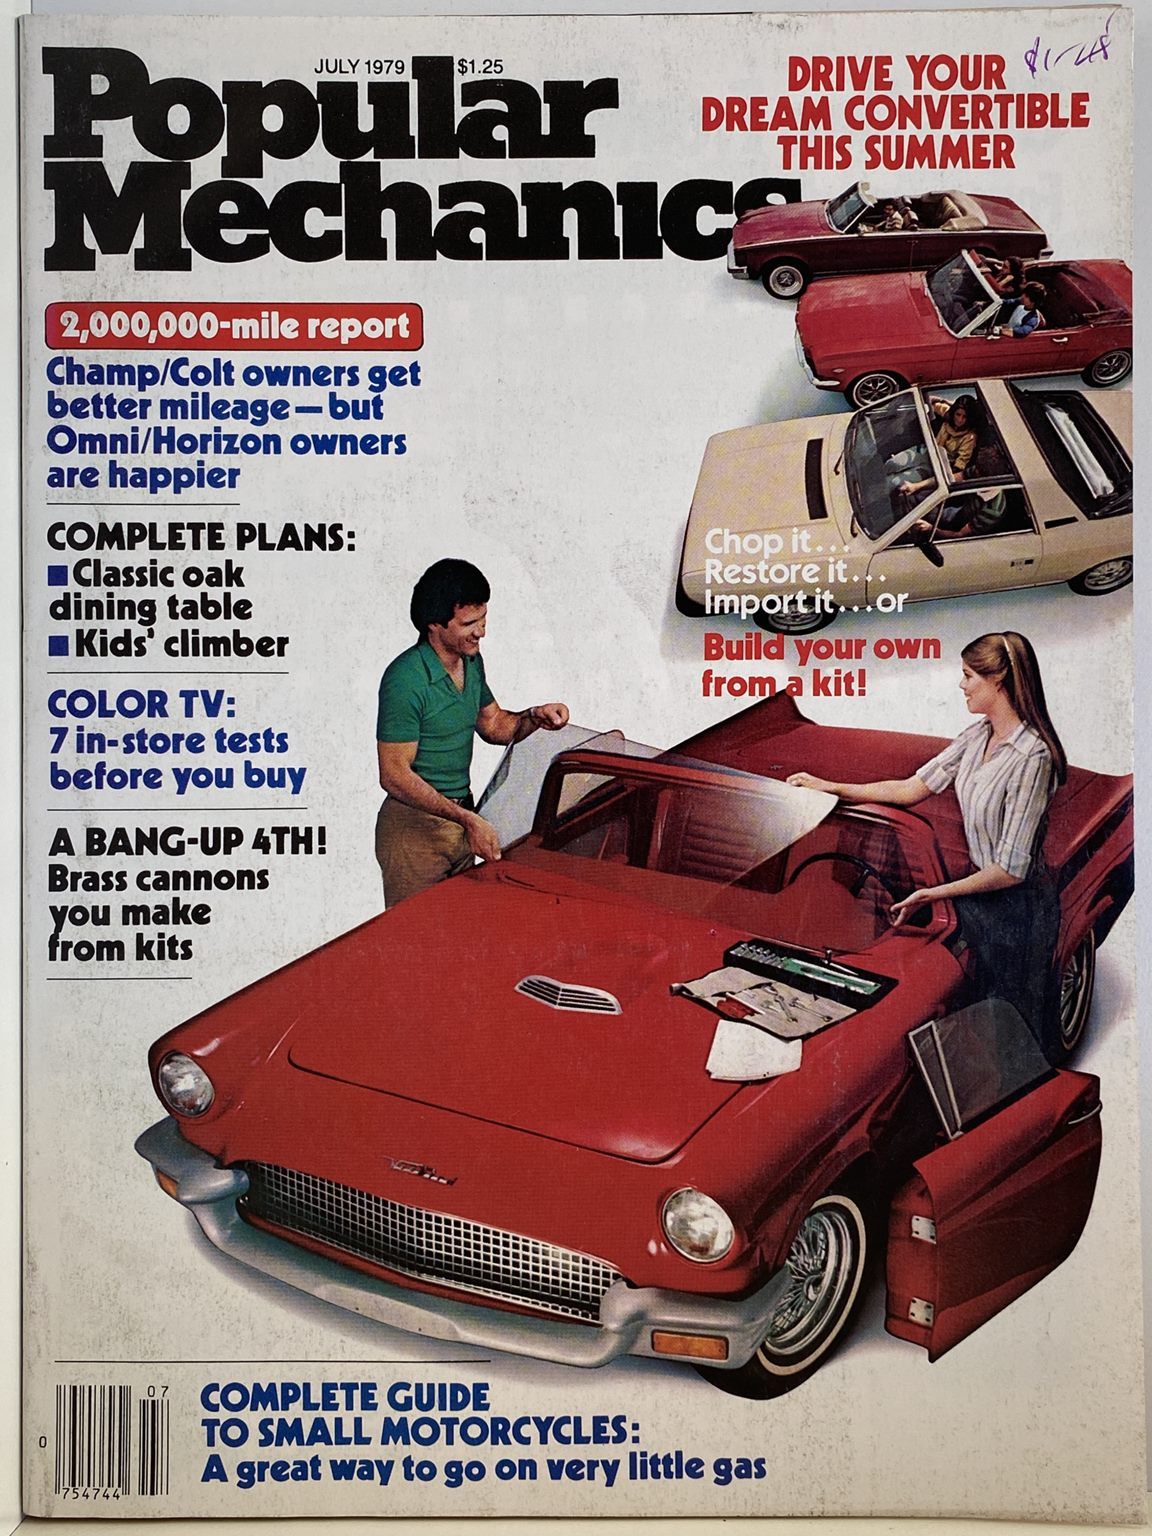 VINTAGE MAGAZINE: Popular Mechanics - Vol. 152, No. 1 - July 1979